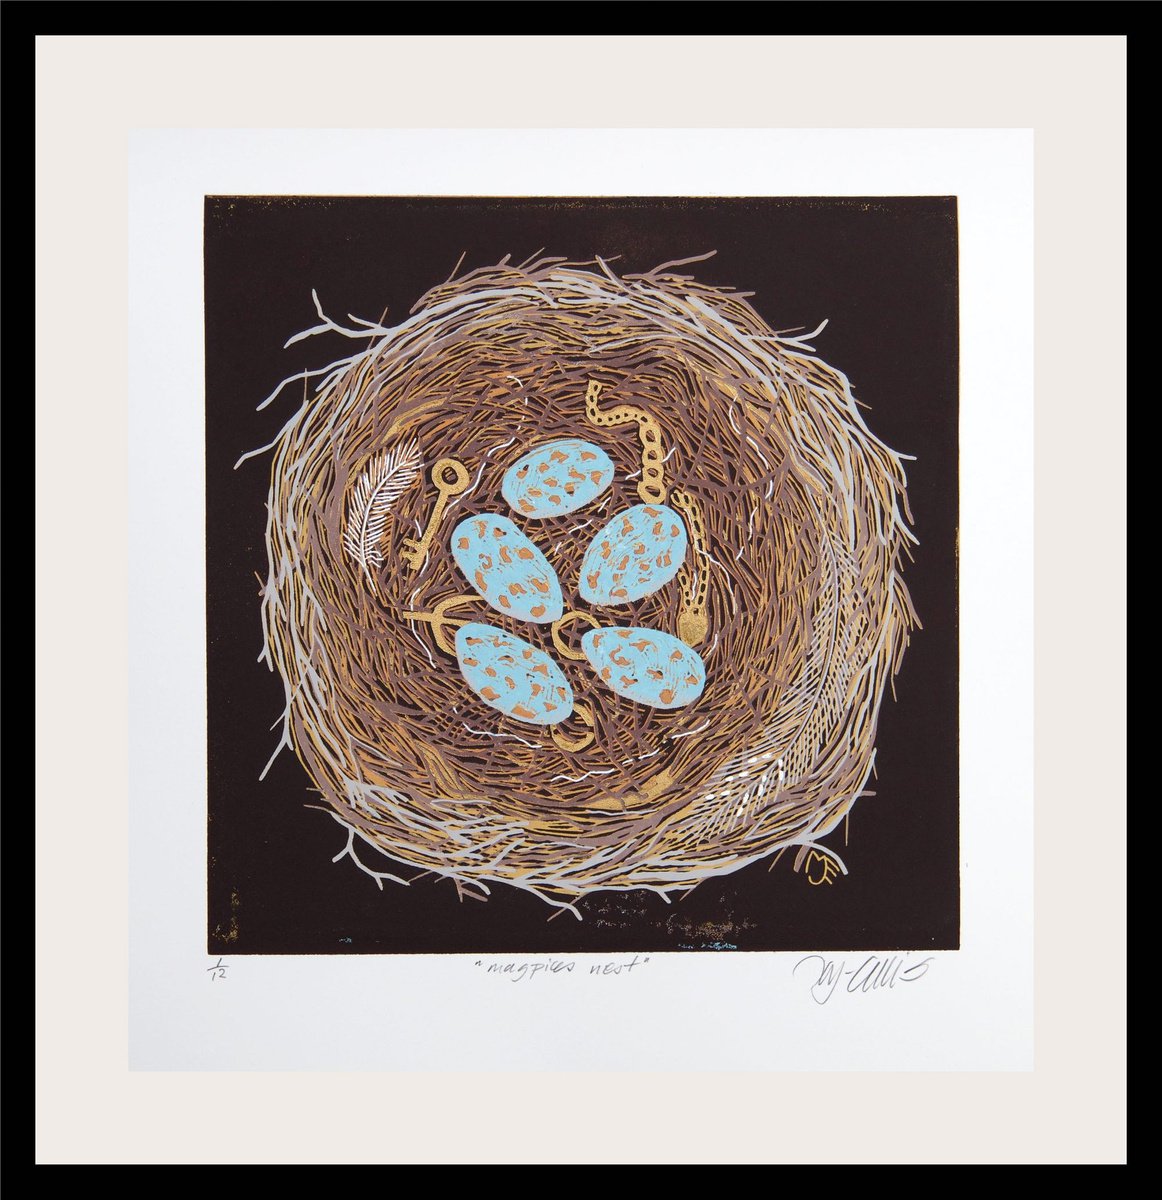 Magpies Nest, linocut reduction with gold by Mariann Johansen-Ellis